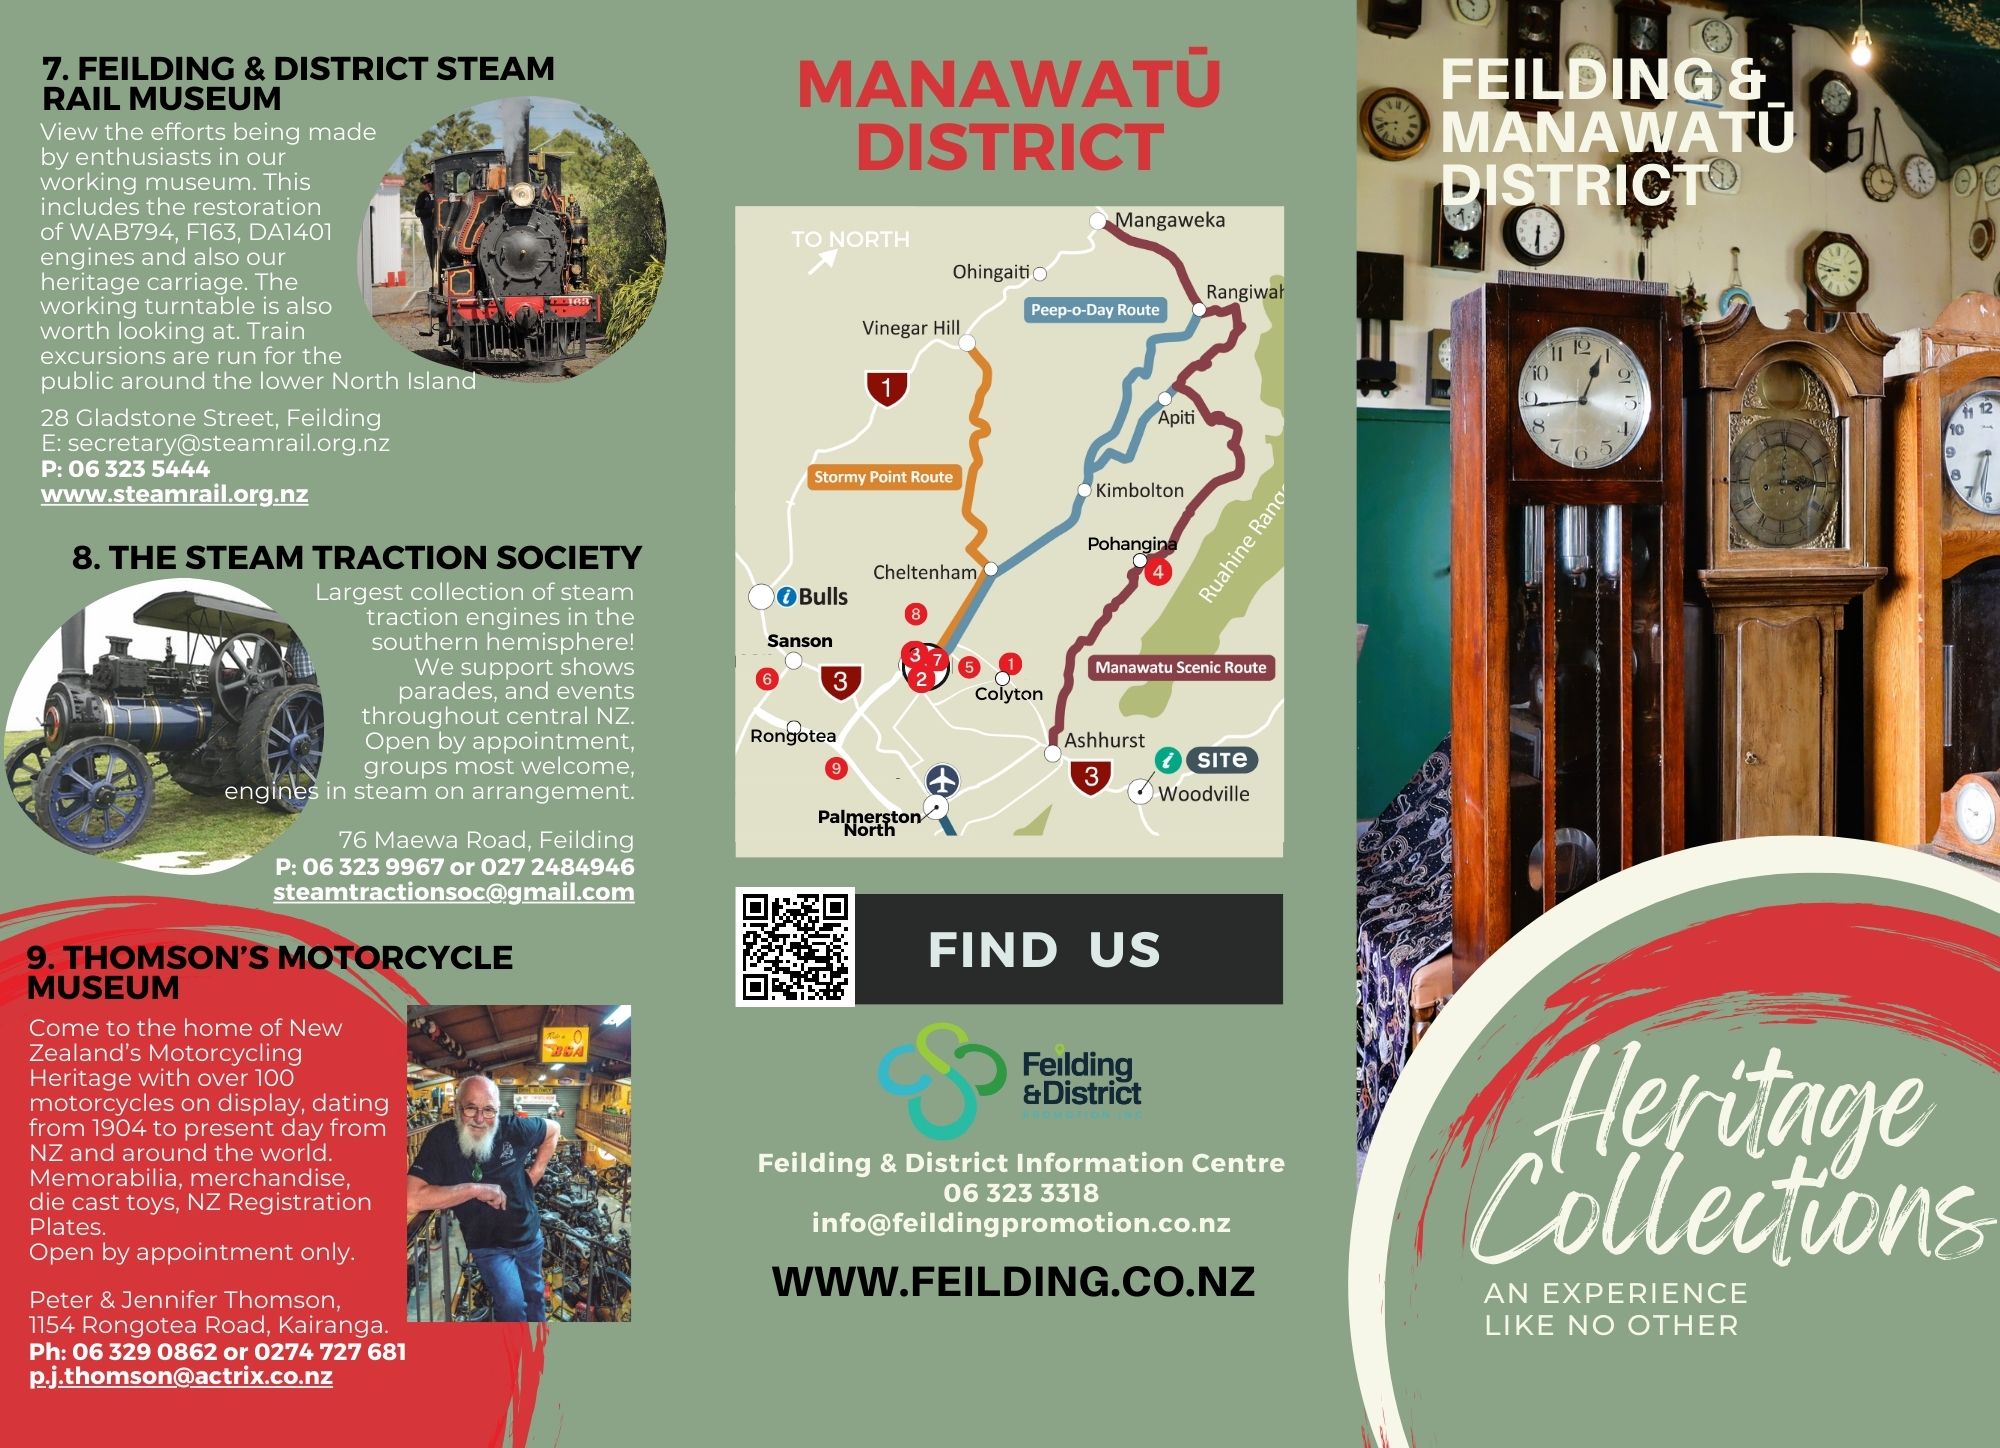 Feilding & Manawatu District Heritage Collections